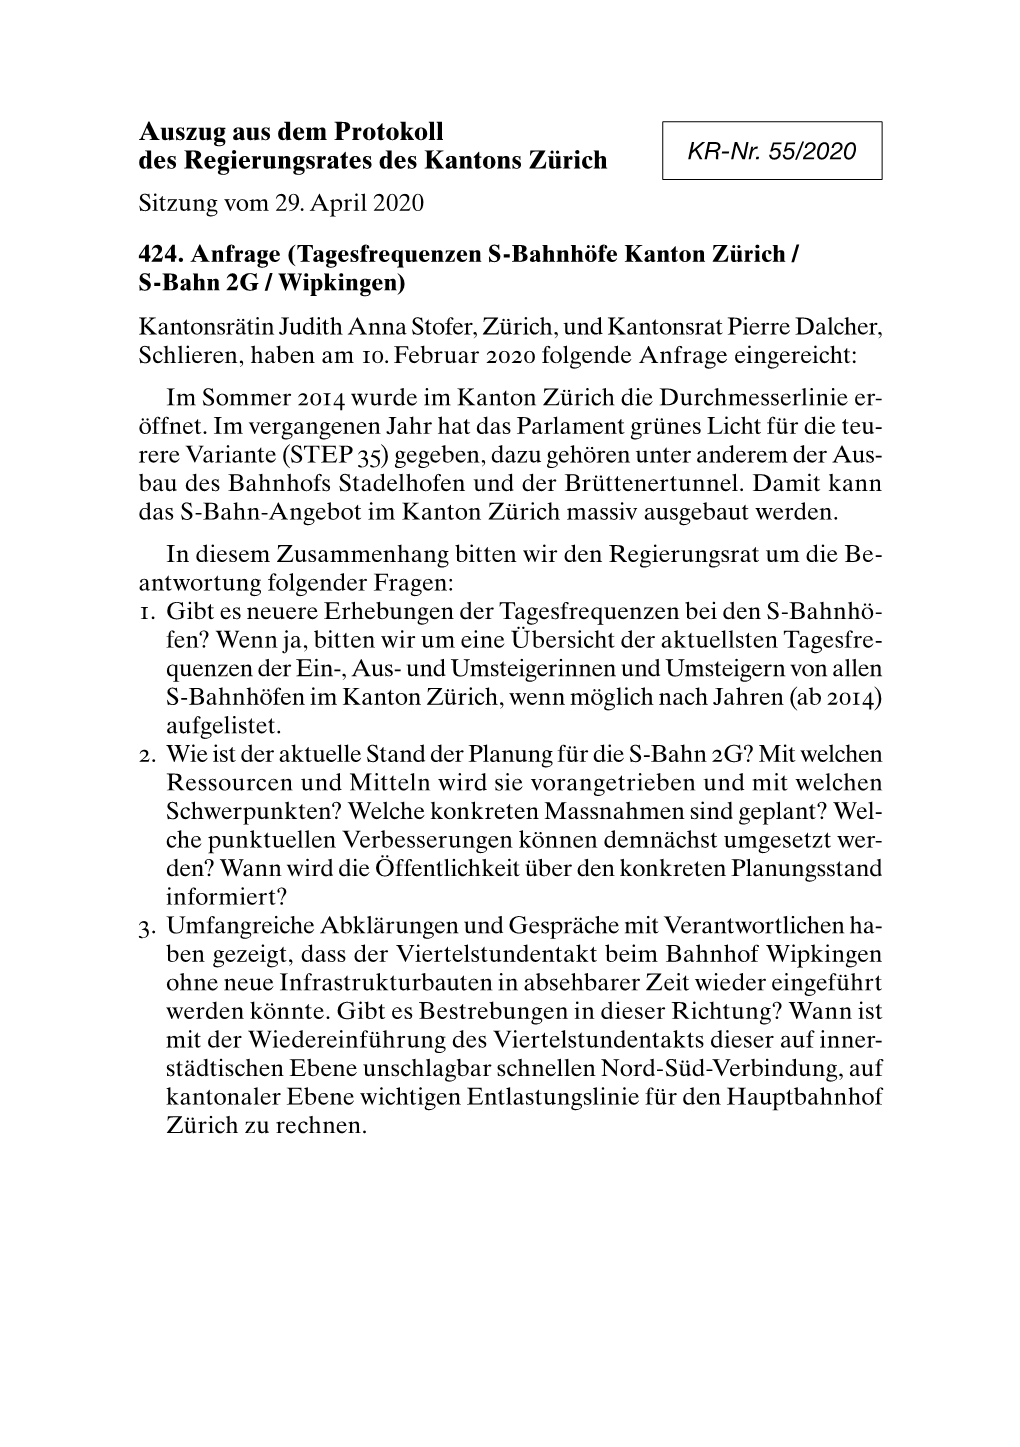 Auszug Aus Dem Protokoll Des Regierungsrates Des Kantons Zürich KR-Nr